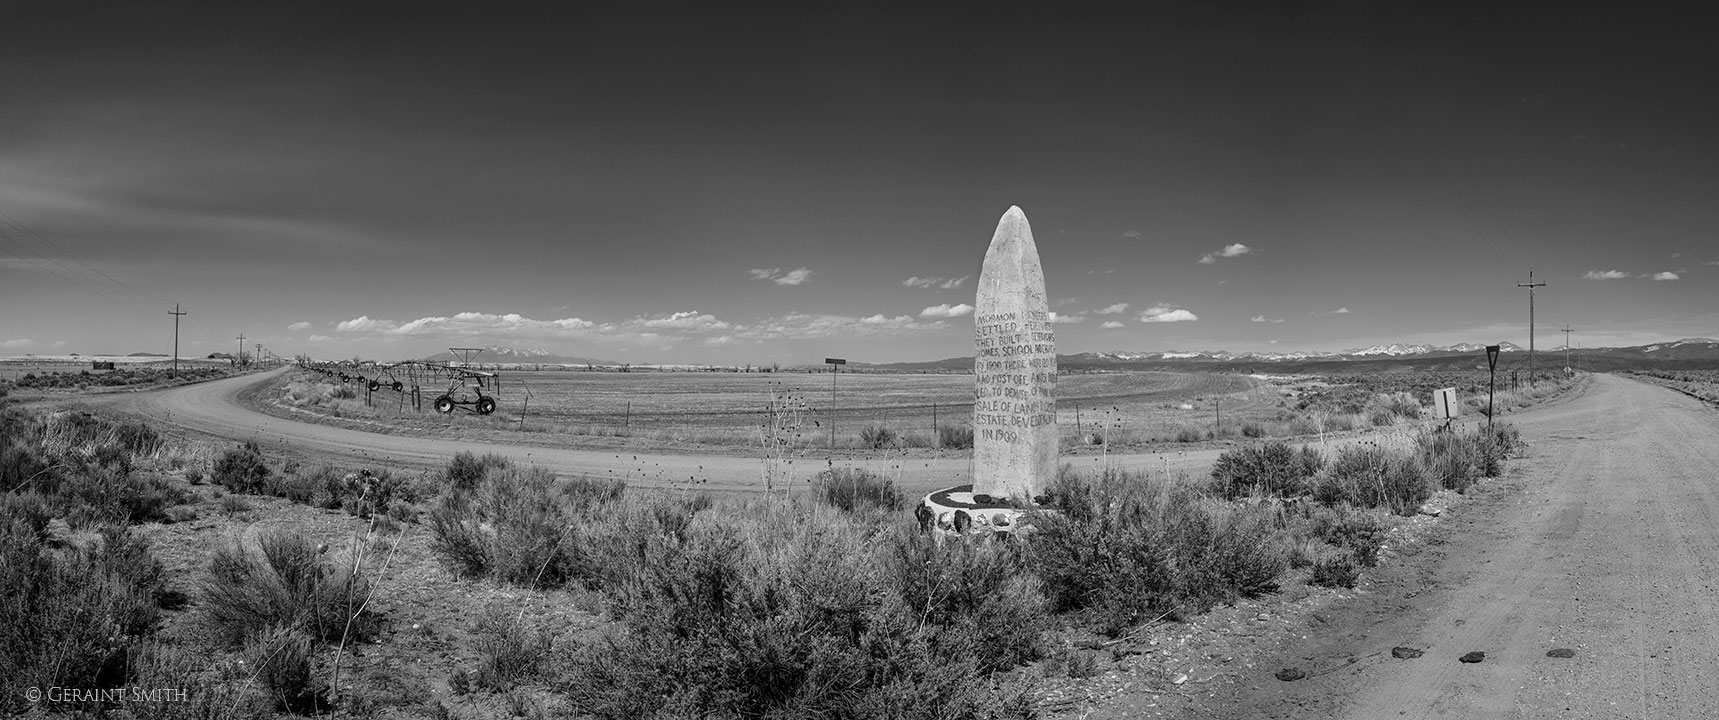 Eastdale township historic monument marker, San Luis Valley, Colorado